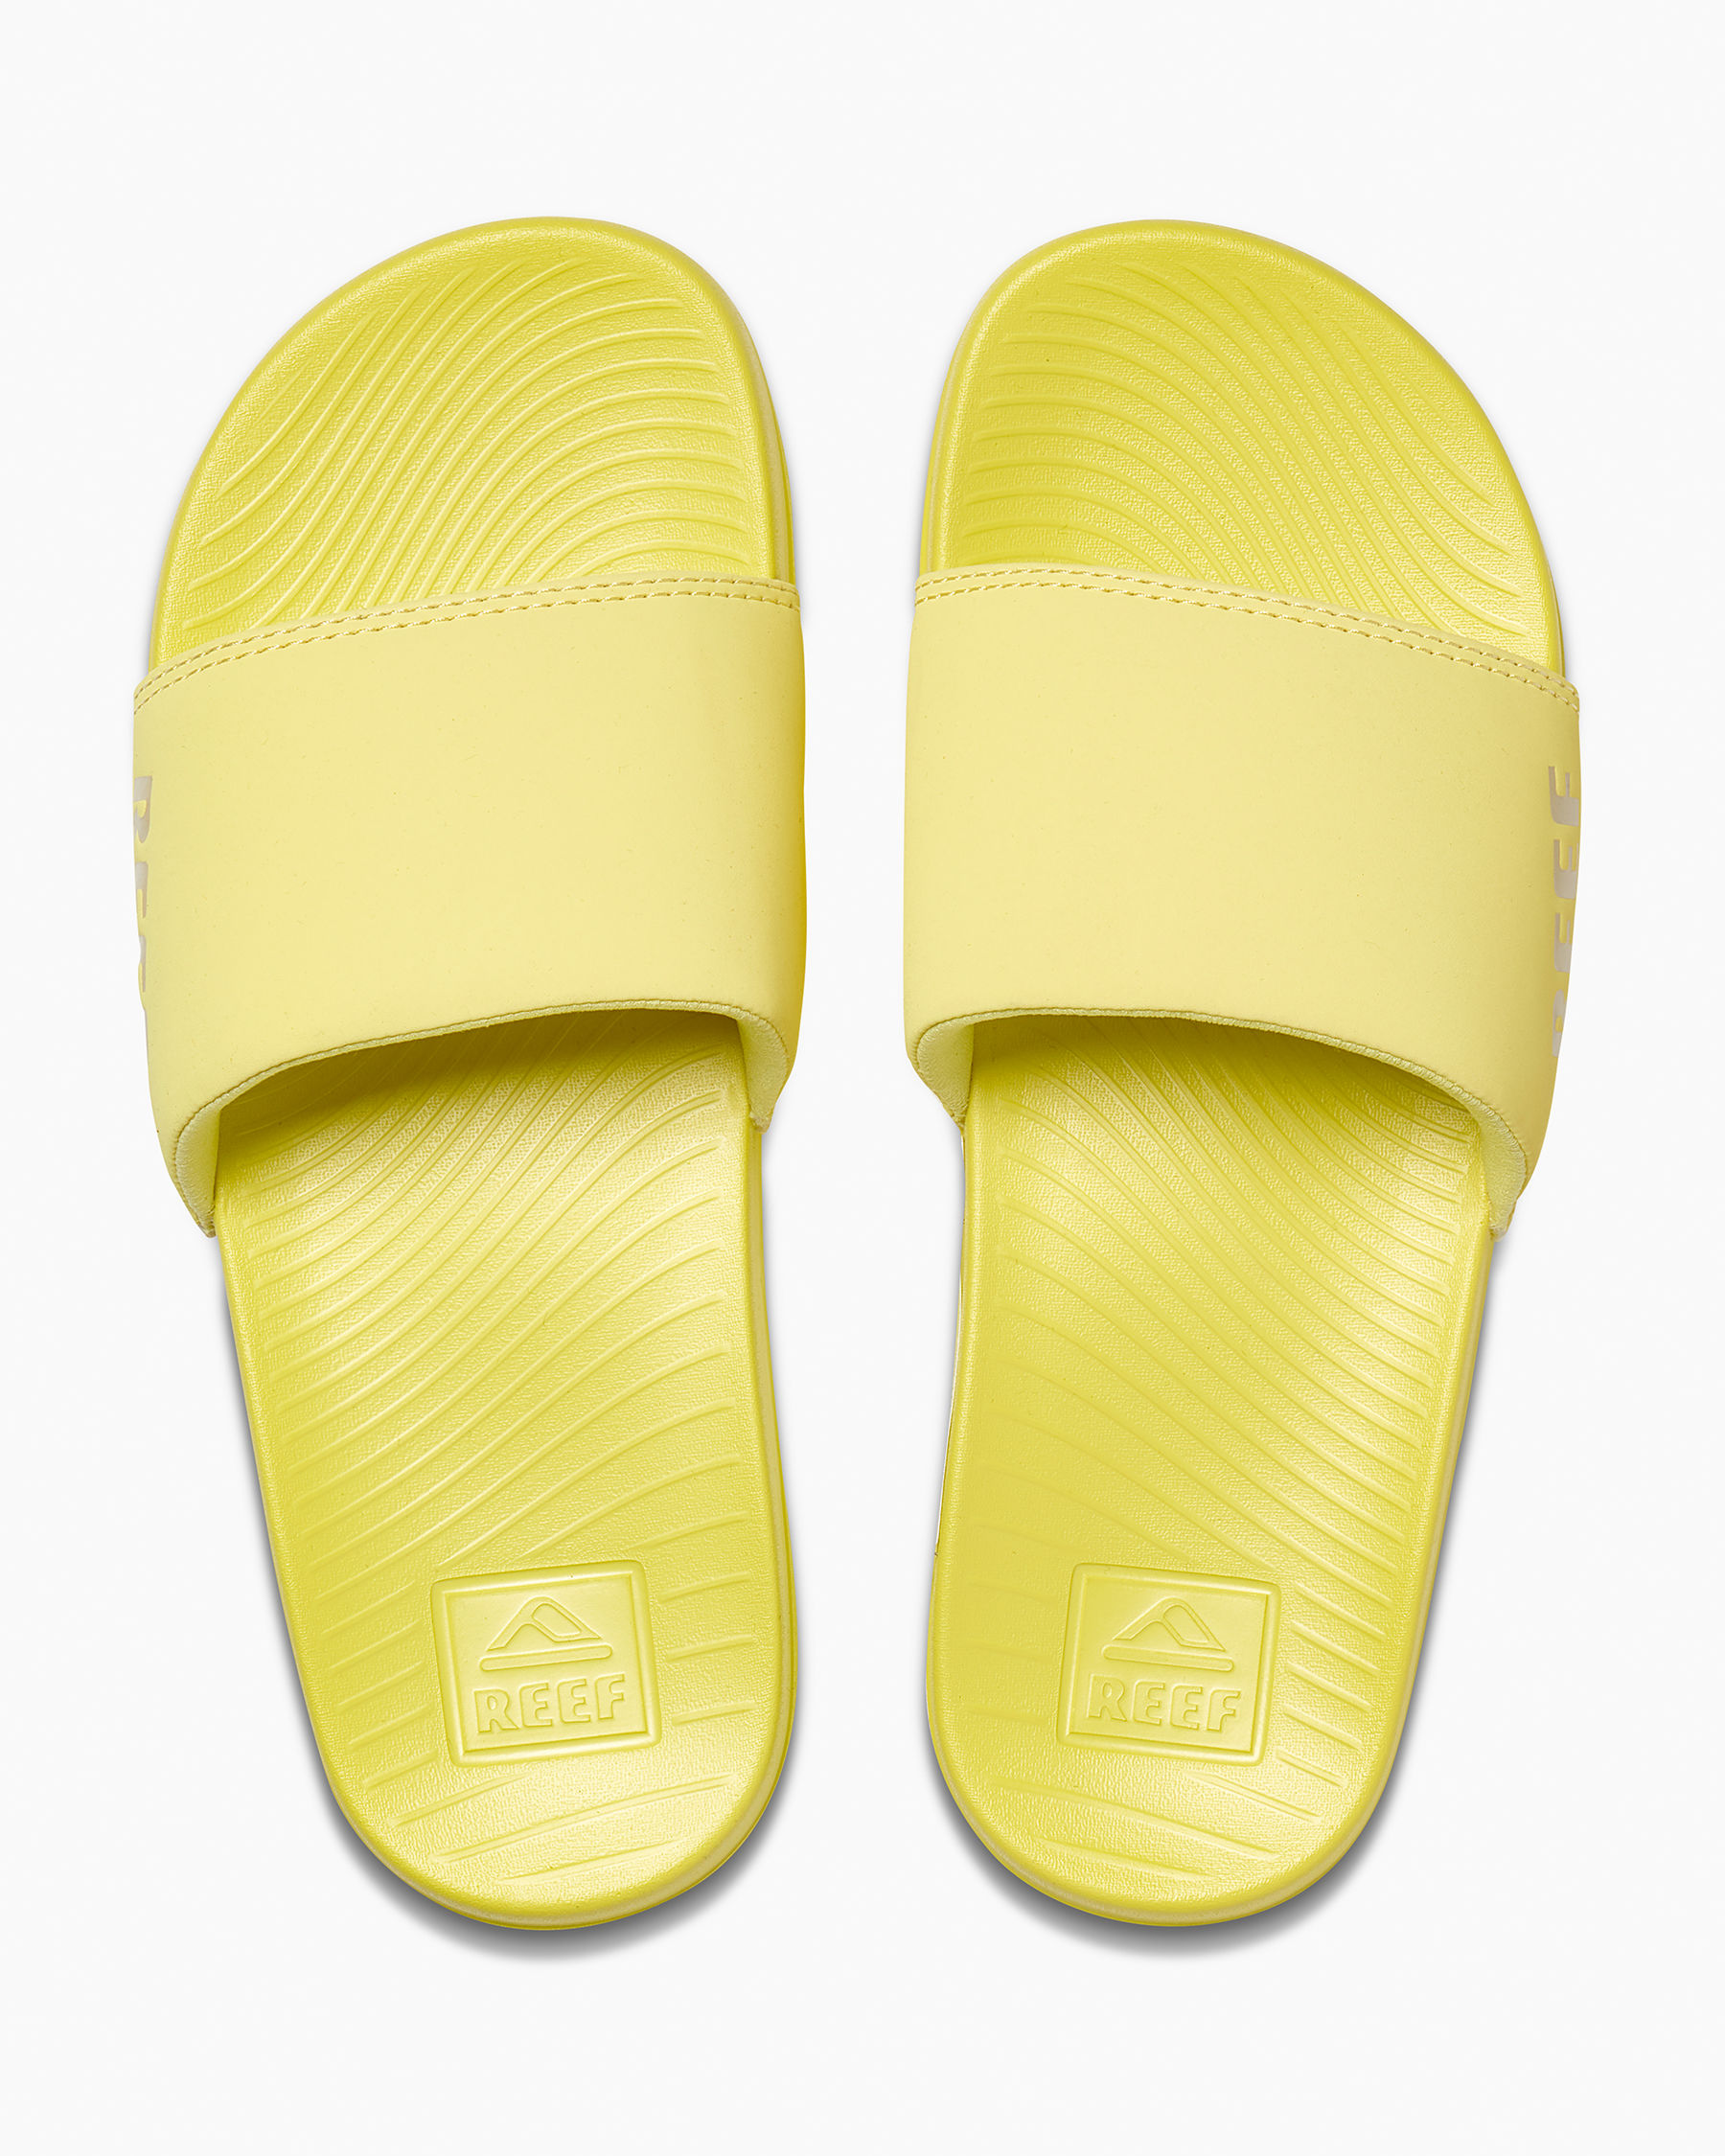 REEF Slide - Neon Yellow | Bikini Village